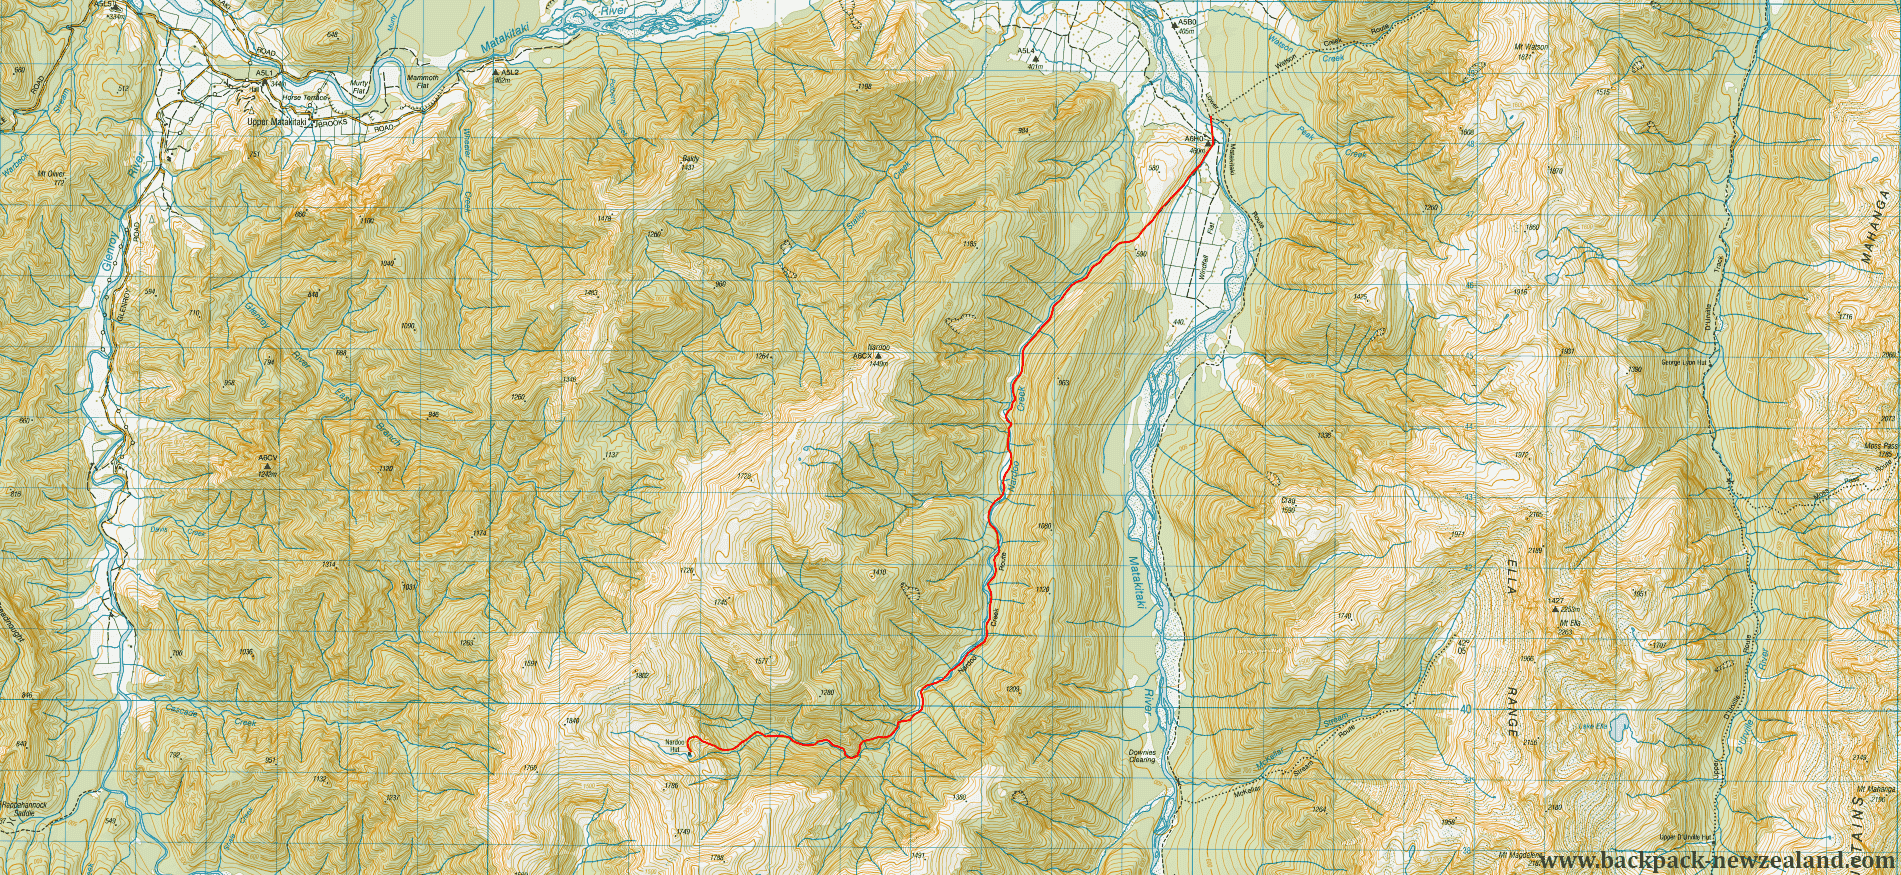 Nardoo Creek Route Map - New Zealand Tracks